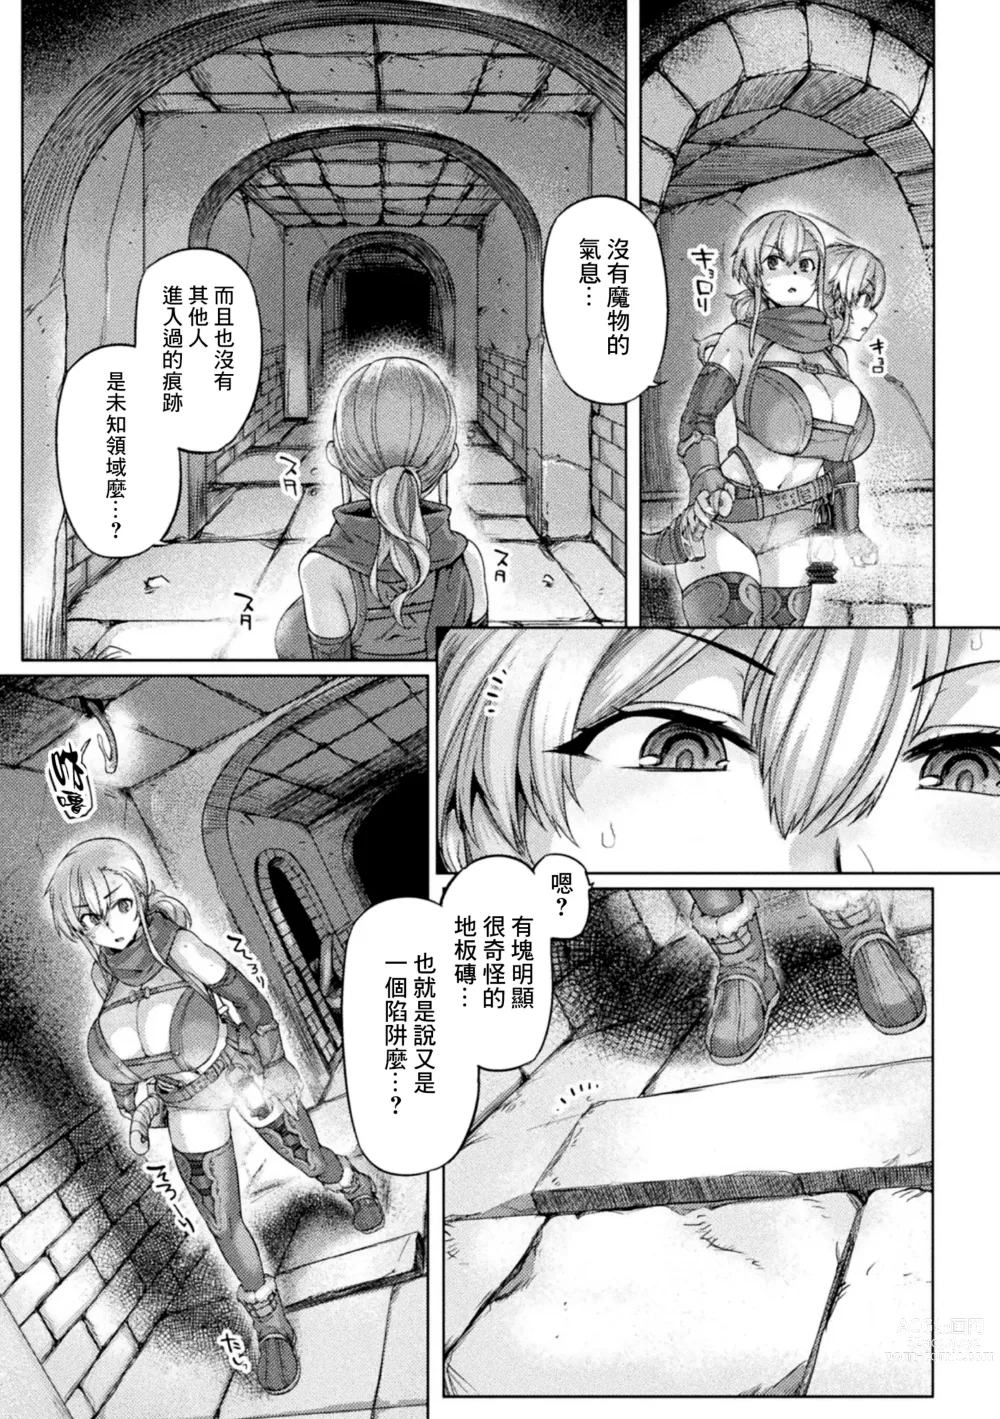 Page 3 of manga 冒險者的末路~亦或是愚者的安息~